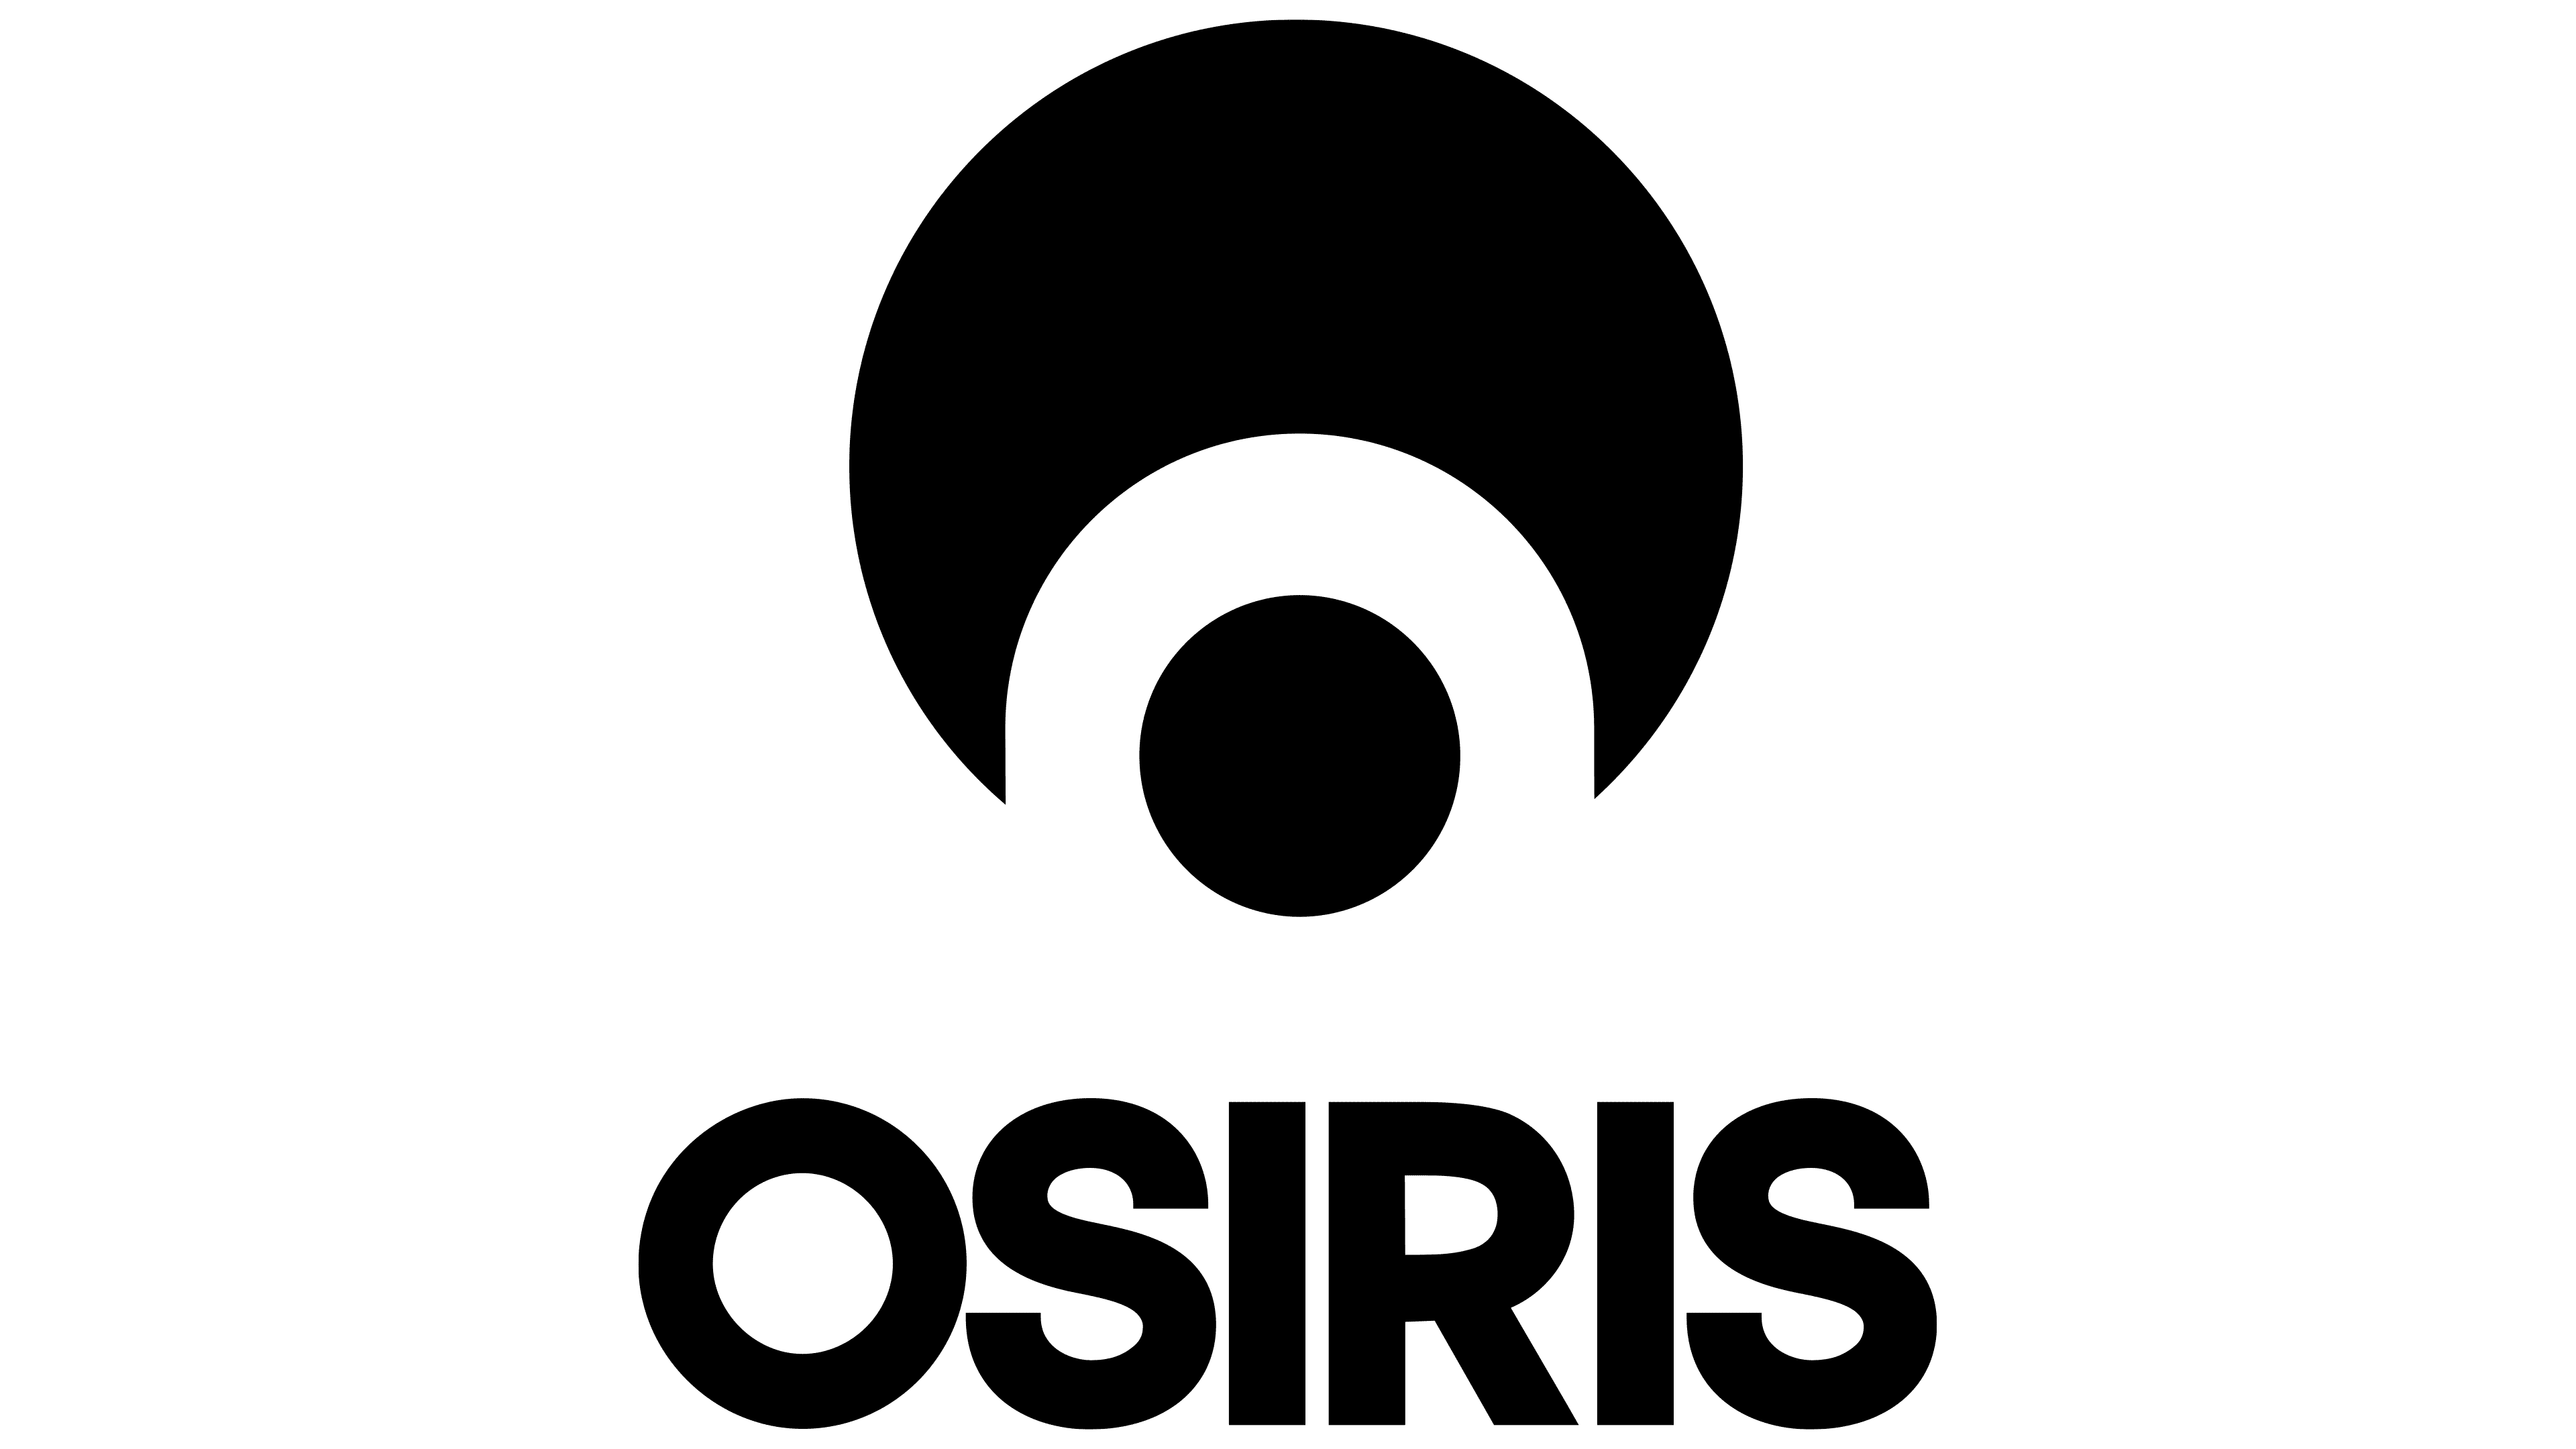 Osiris Shoes Logo